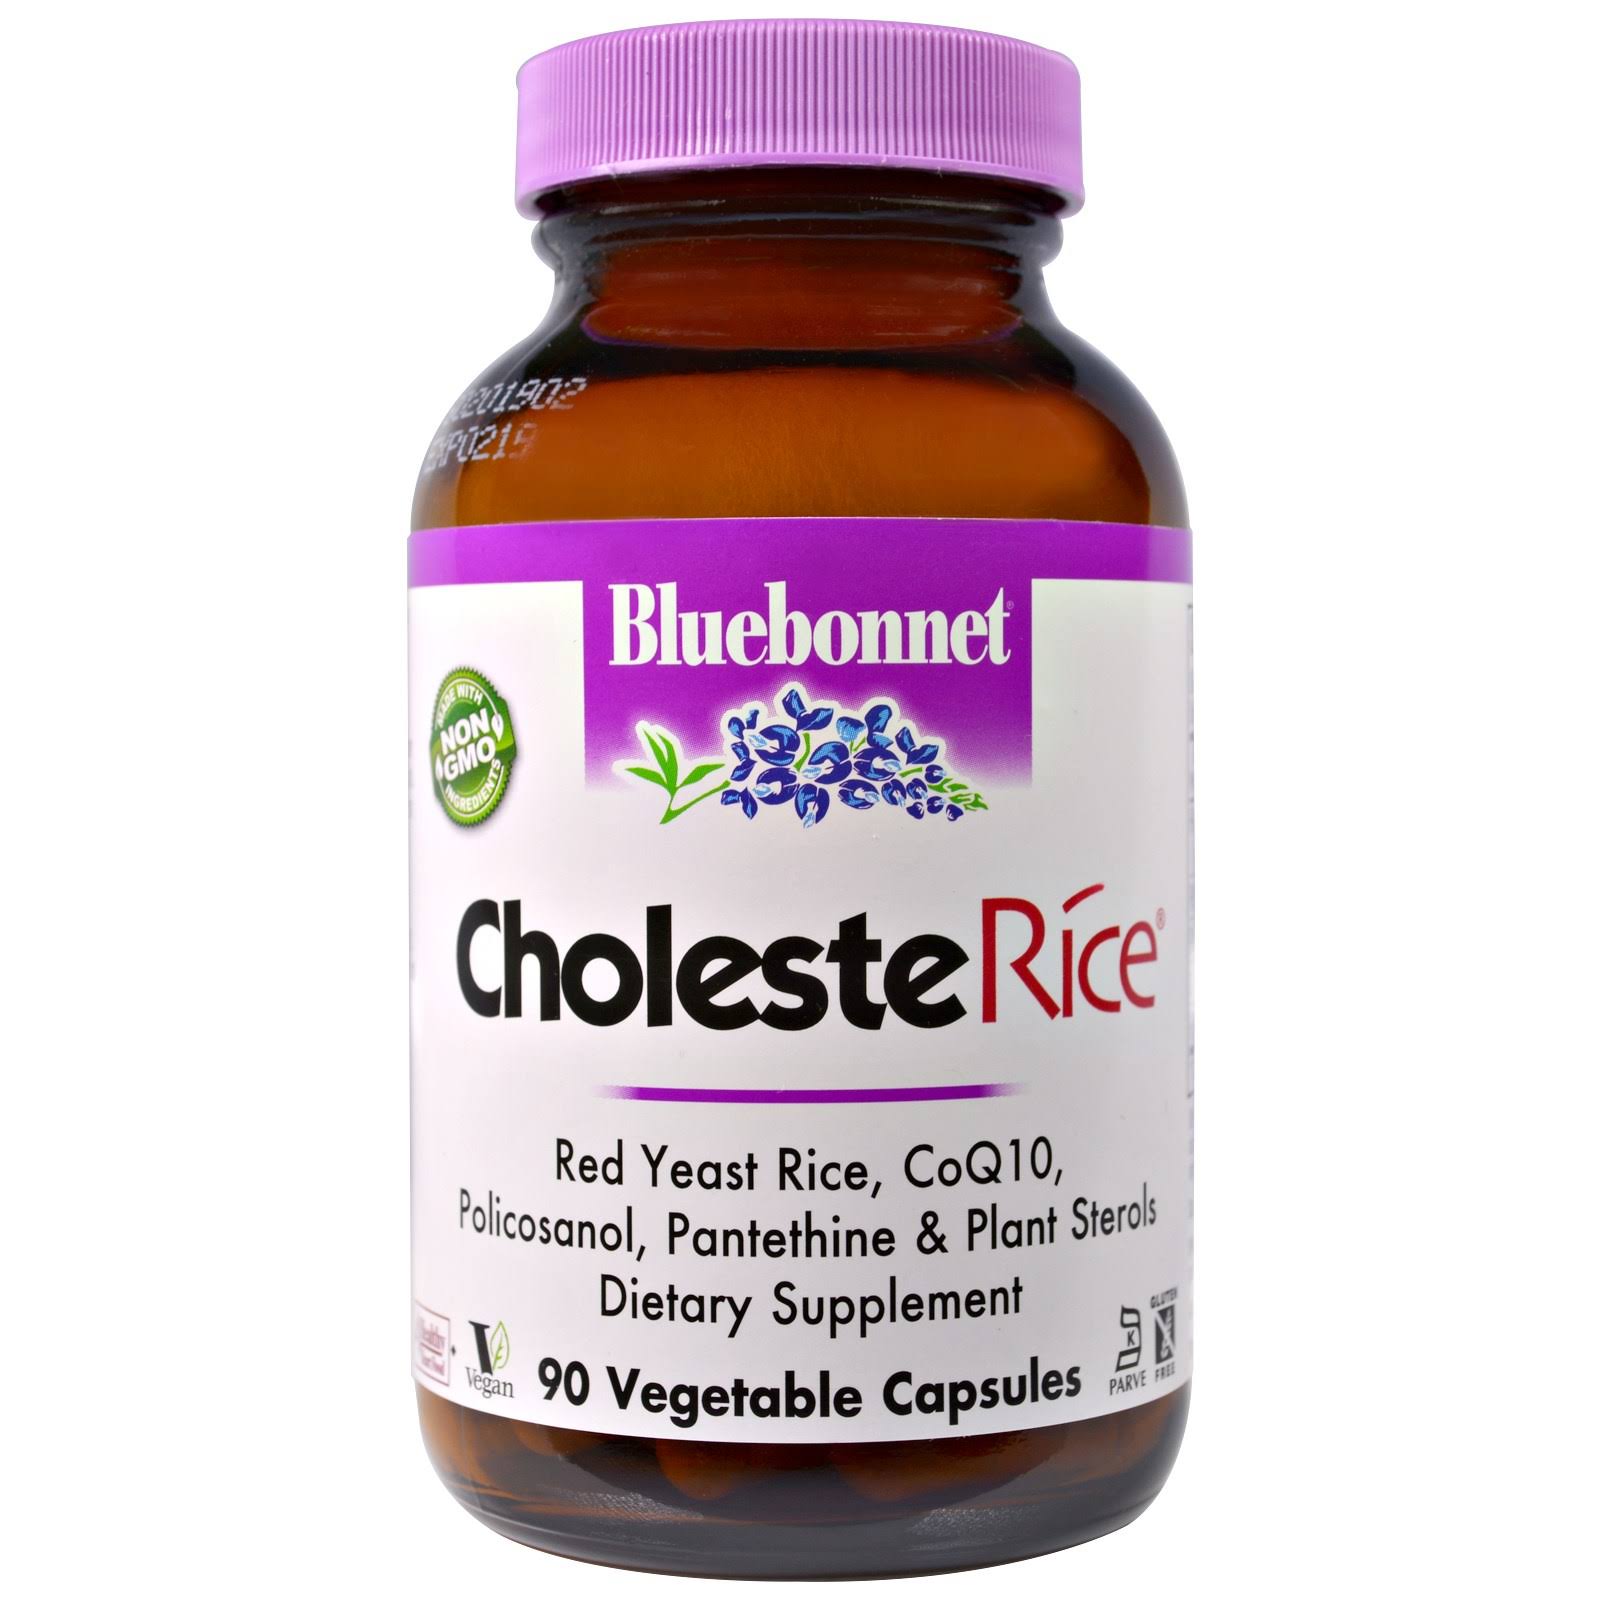 Bluebonnet CholesteRice